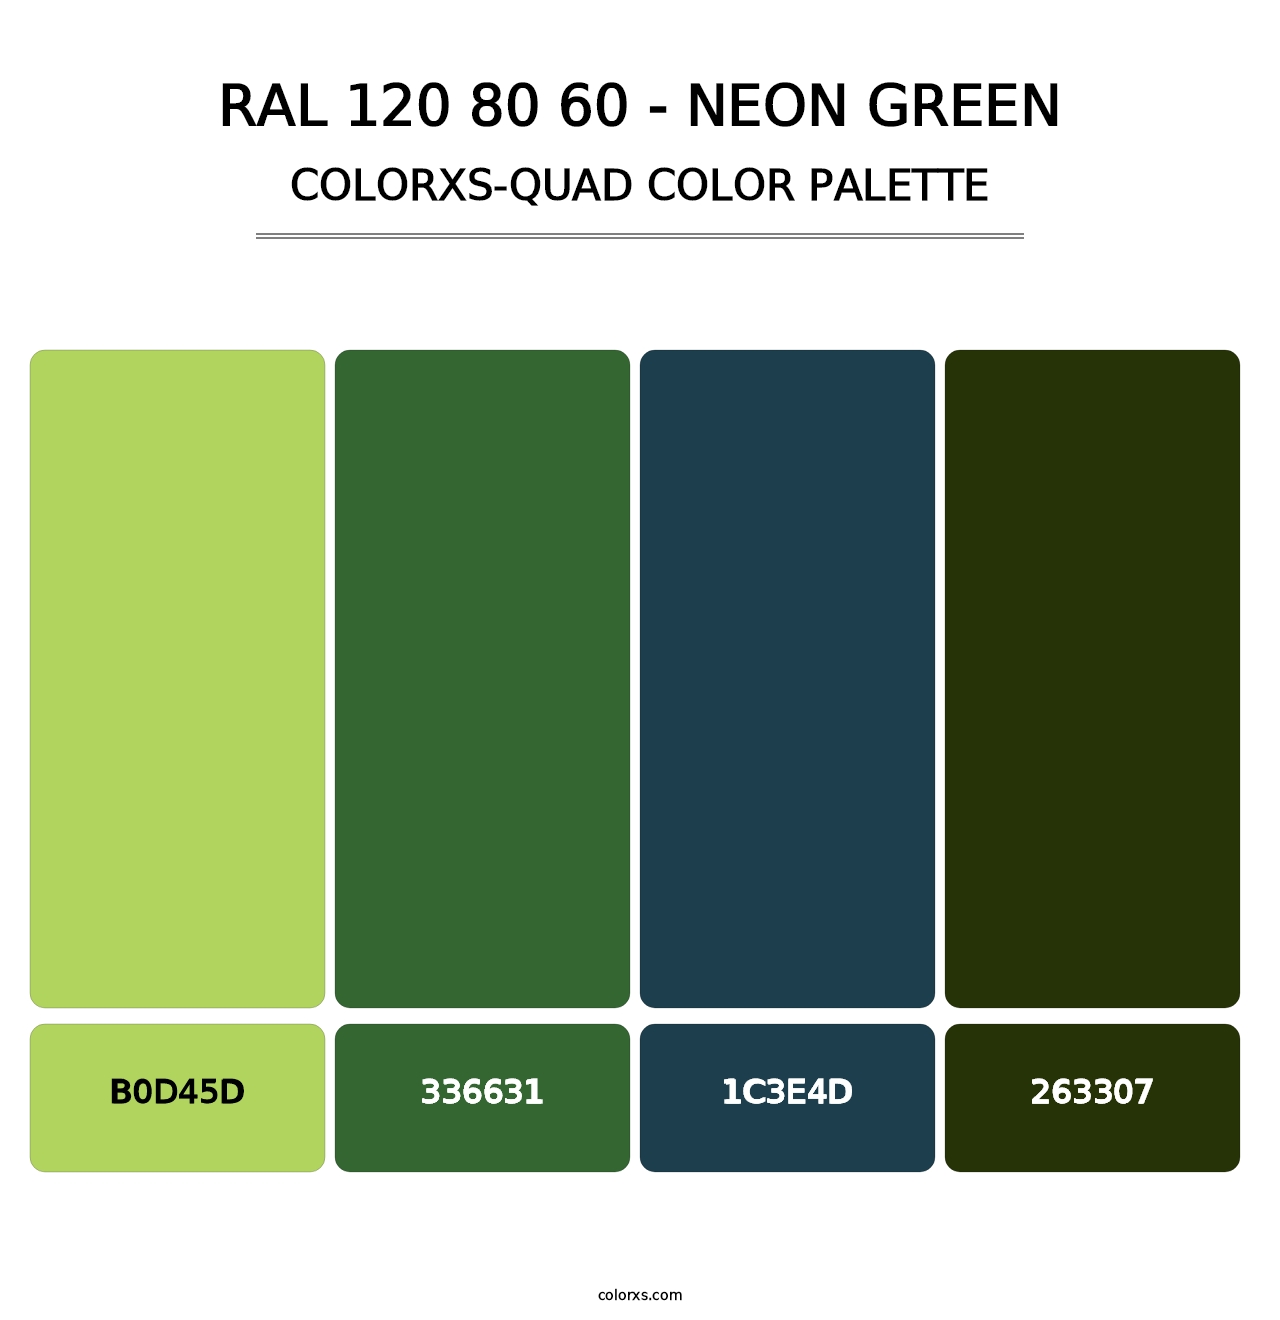 RAL 120 80 60 - Neon Green - Colorxs Quad Palette